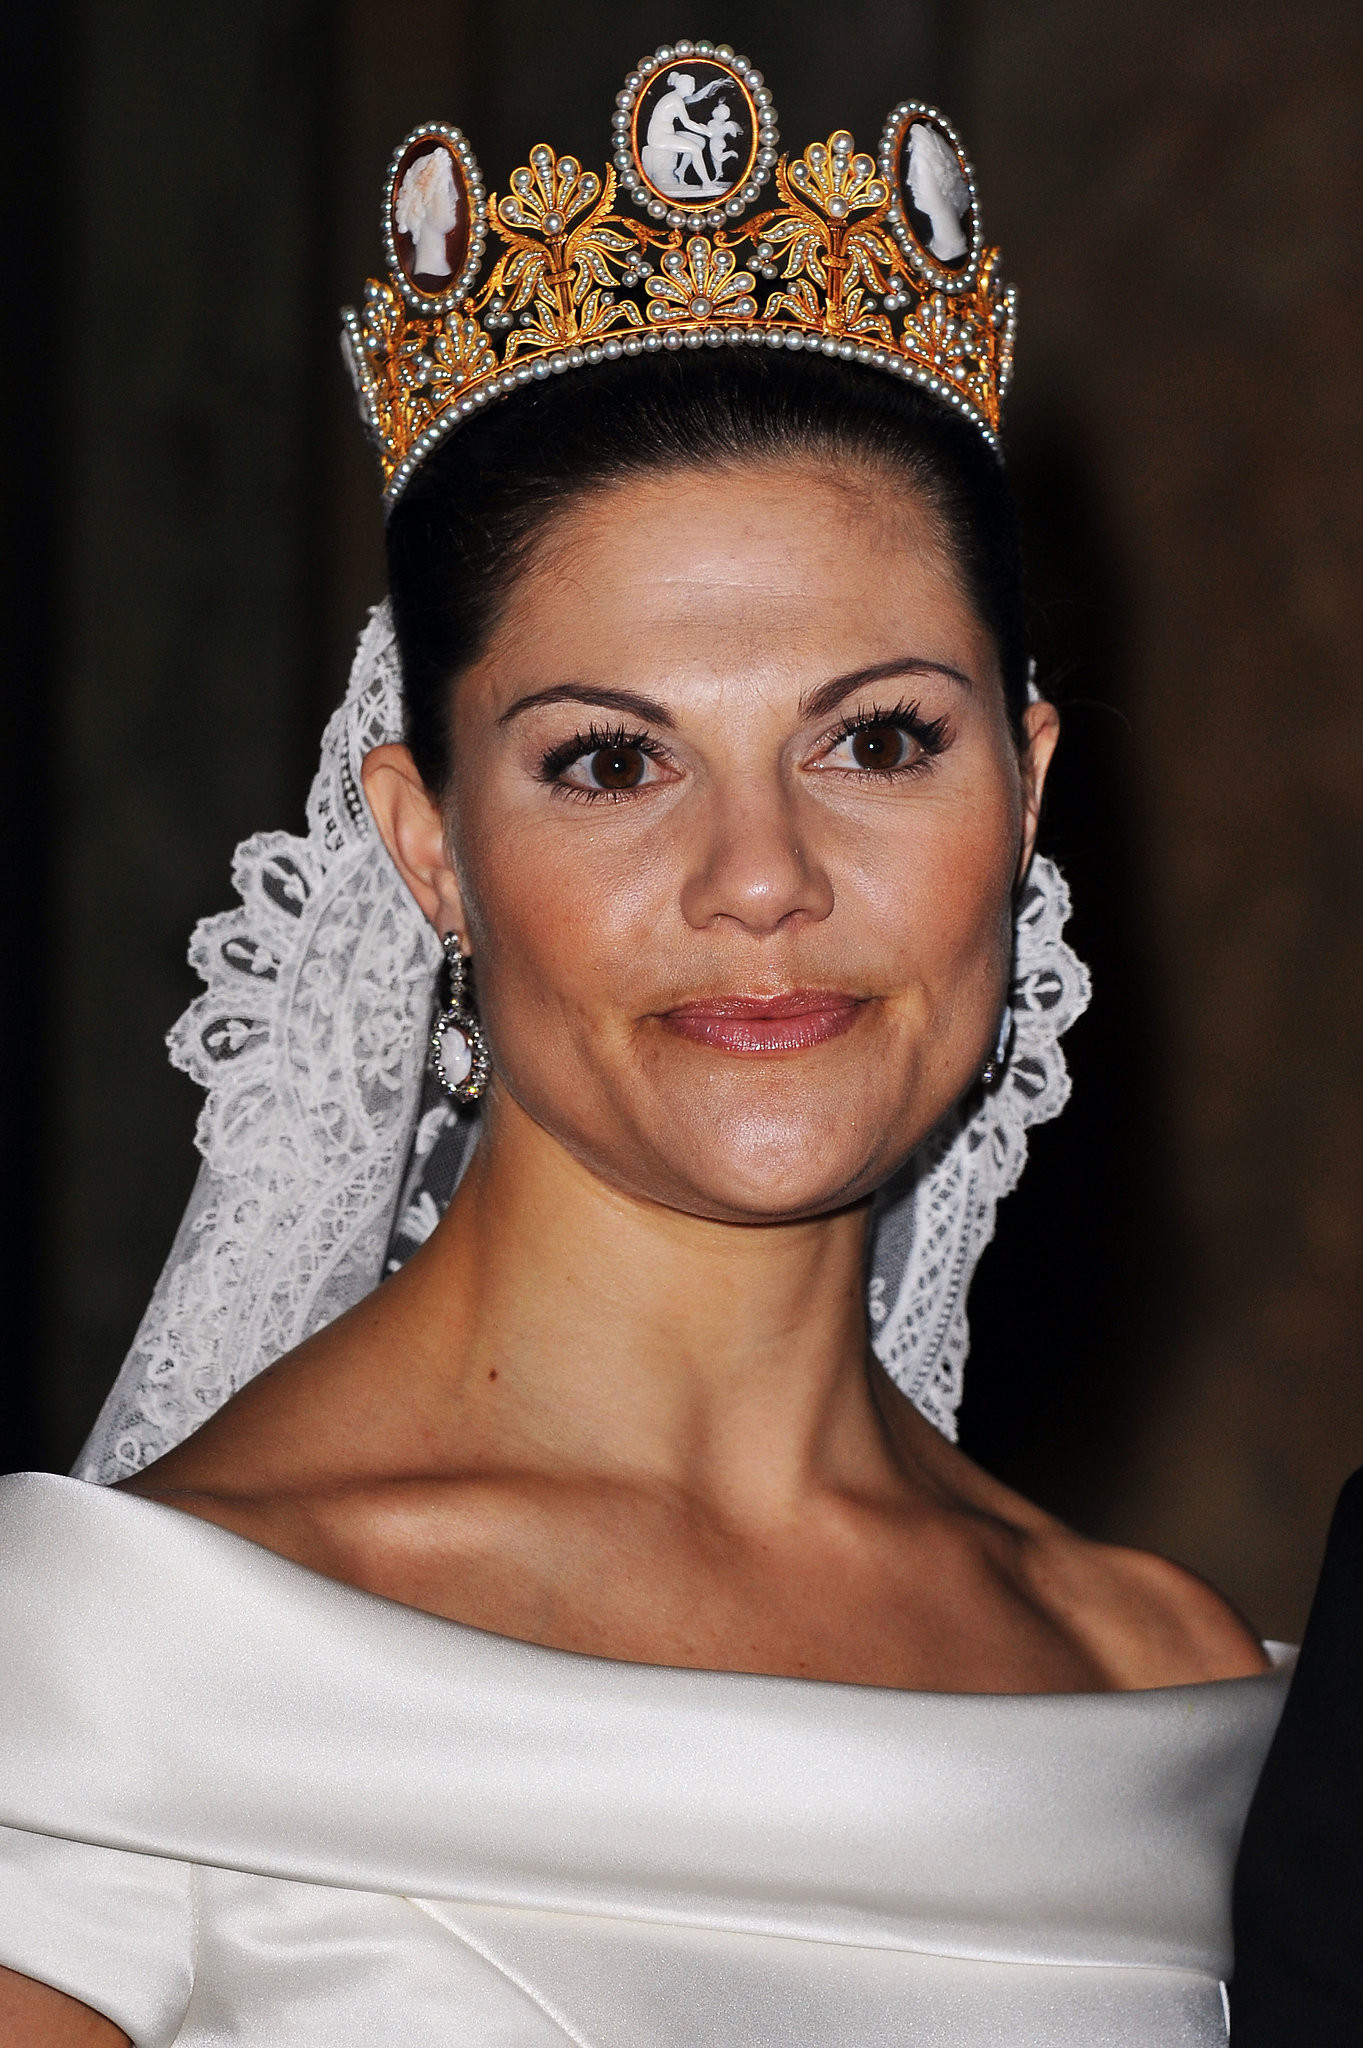 Виктория, кронпринцесса Швеции (Victoria, Crown Princess of Sweden)